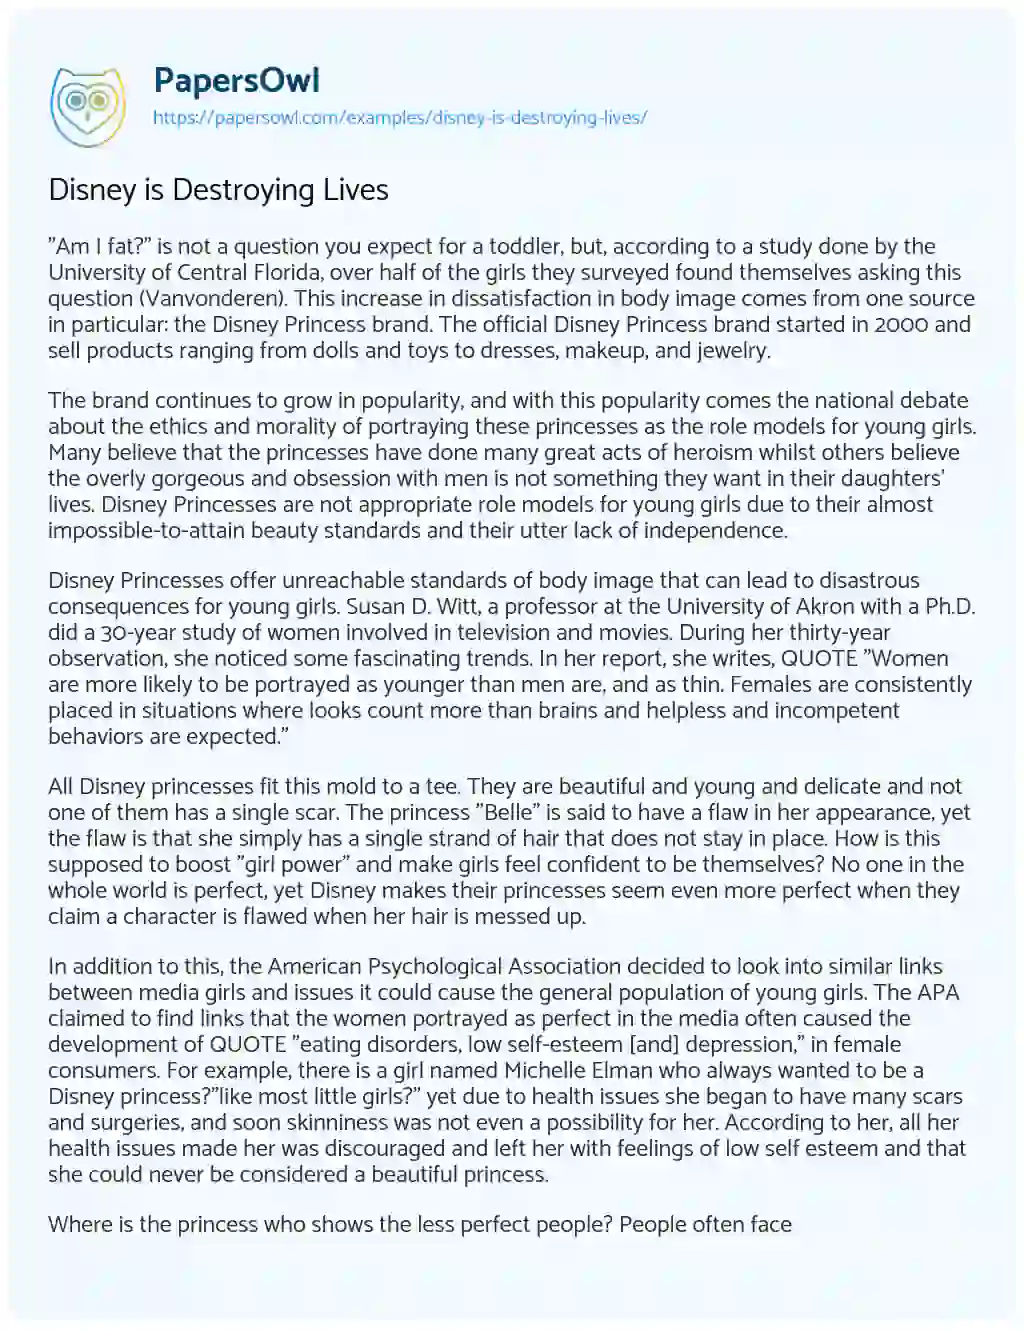 Essay on Disney is Destroying Lives